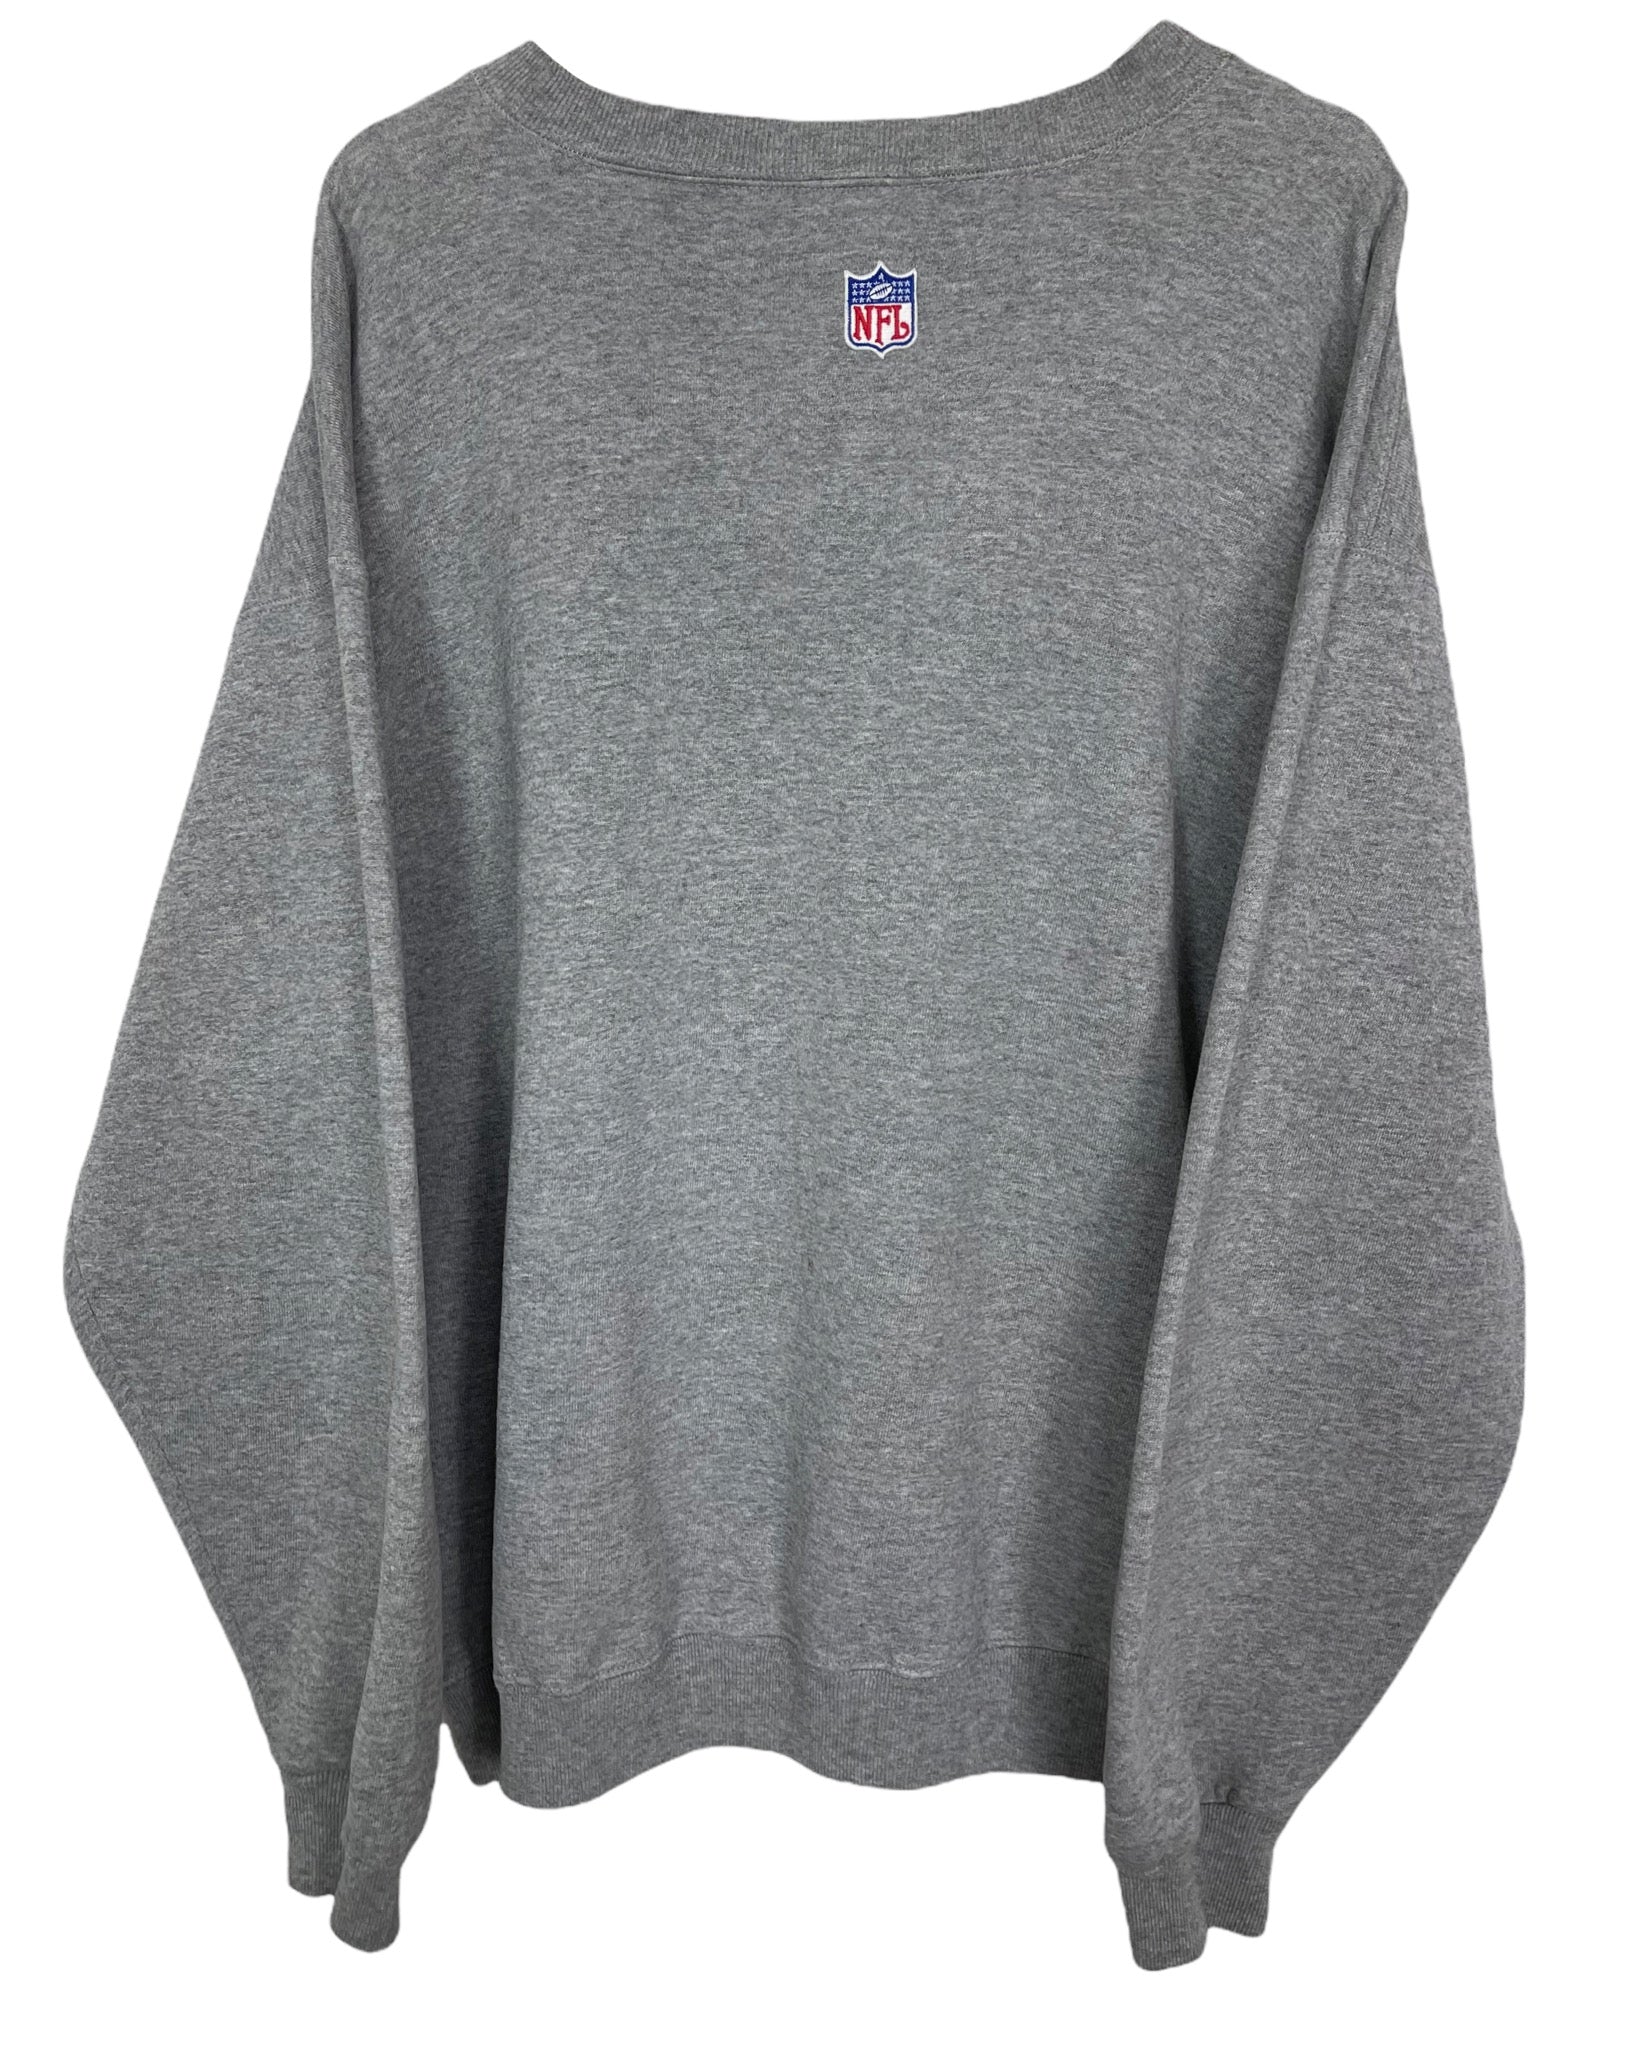  Sweatshirt Reebok Sweat - Indianapolis Colts - XL - PLOMOSTORE